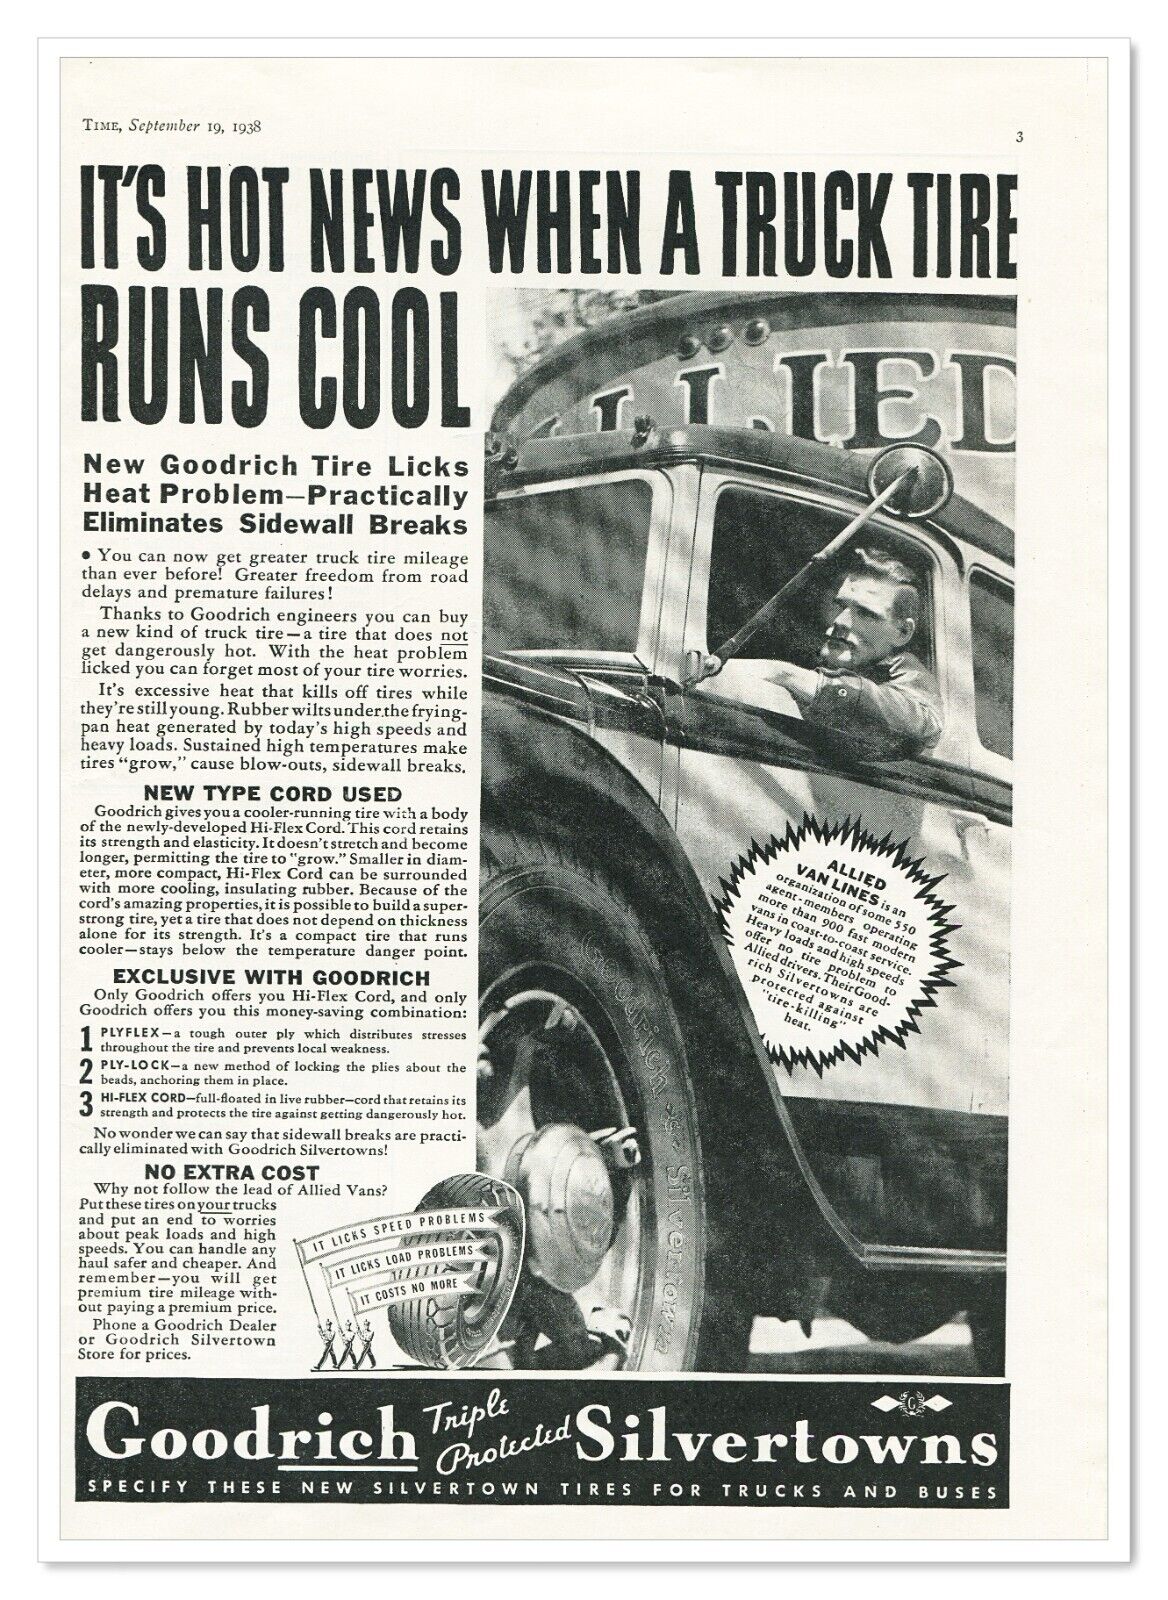 Print Ad Goodrich Silvertown Tires Allied Van Lines Vintage 1938 Advertisement